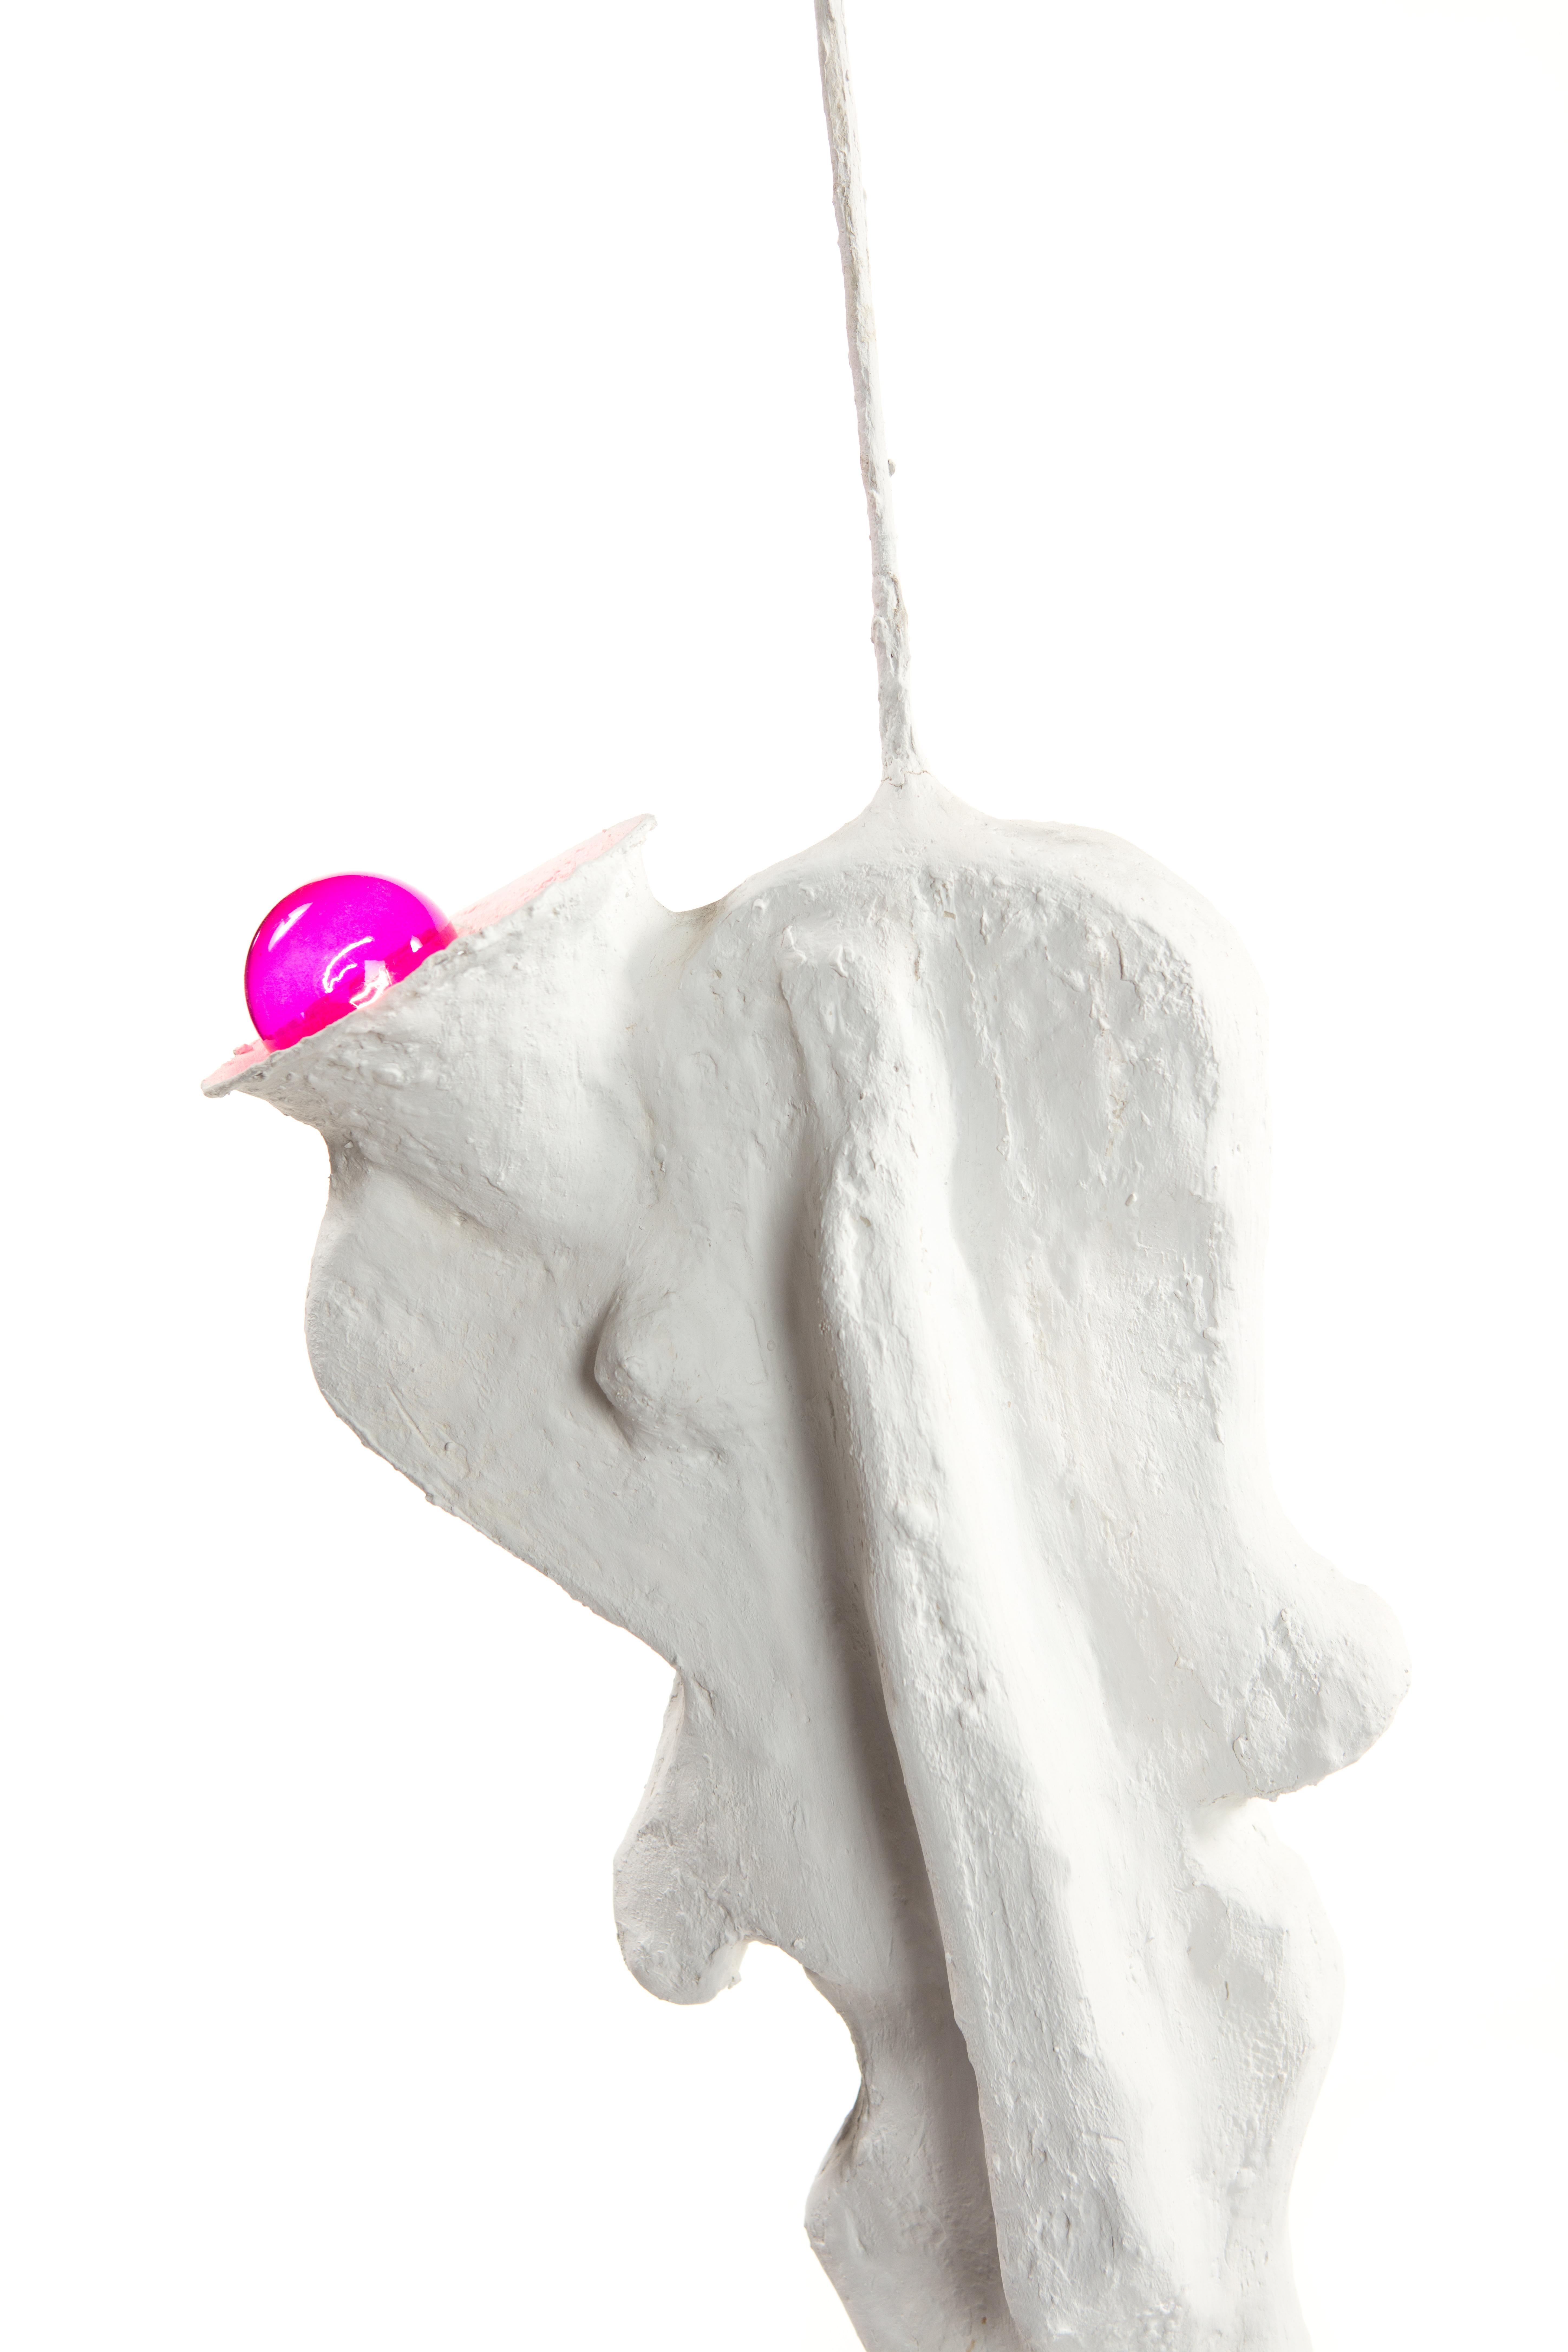 White Plaster Sculptural Table Lamp, 21st Century by Mattia Biagi For Sale 8